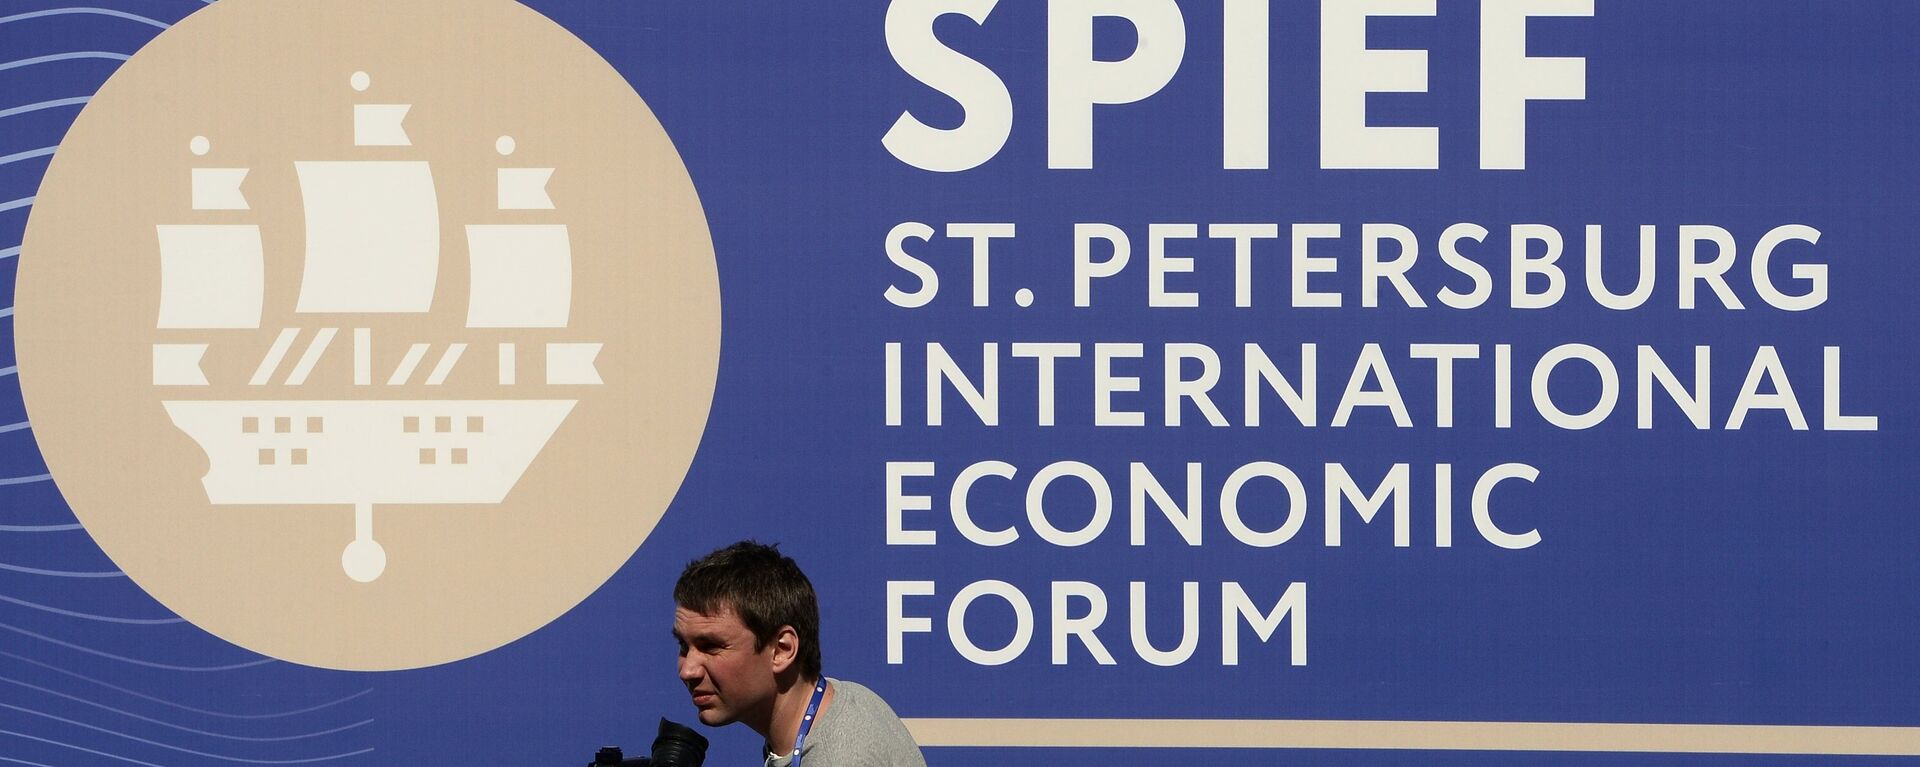 The logo of the St. Petersburg International Economic Forum. (File) - Sputnik International, 1920, 01.04.2022